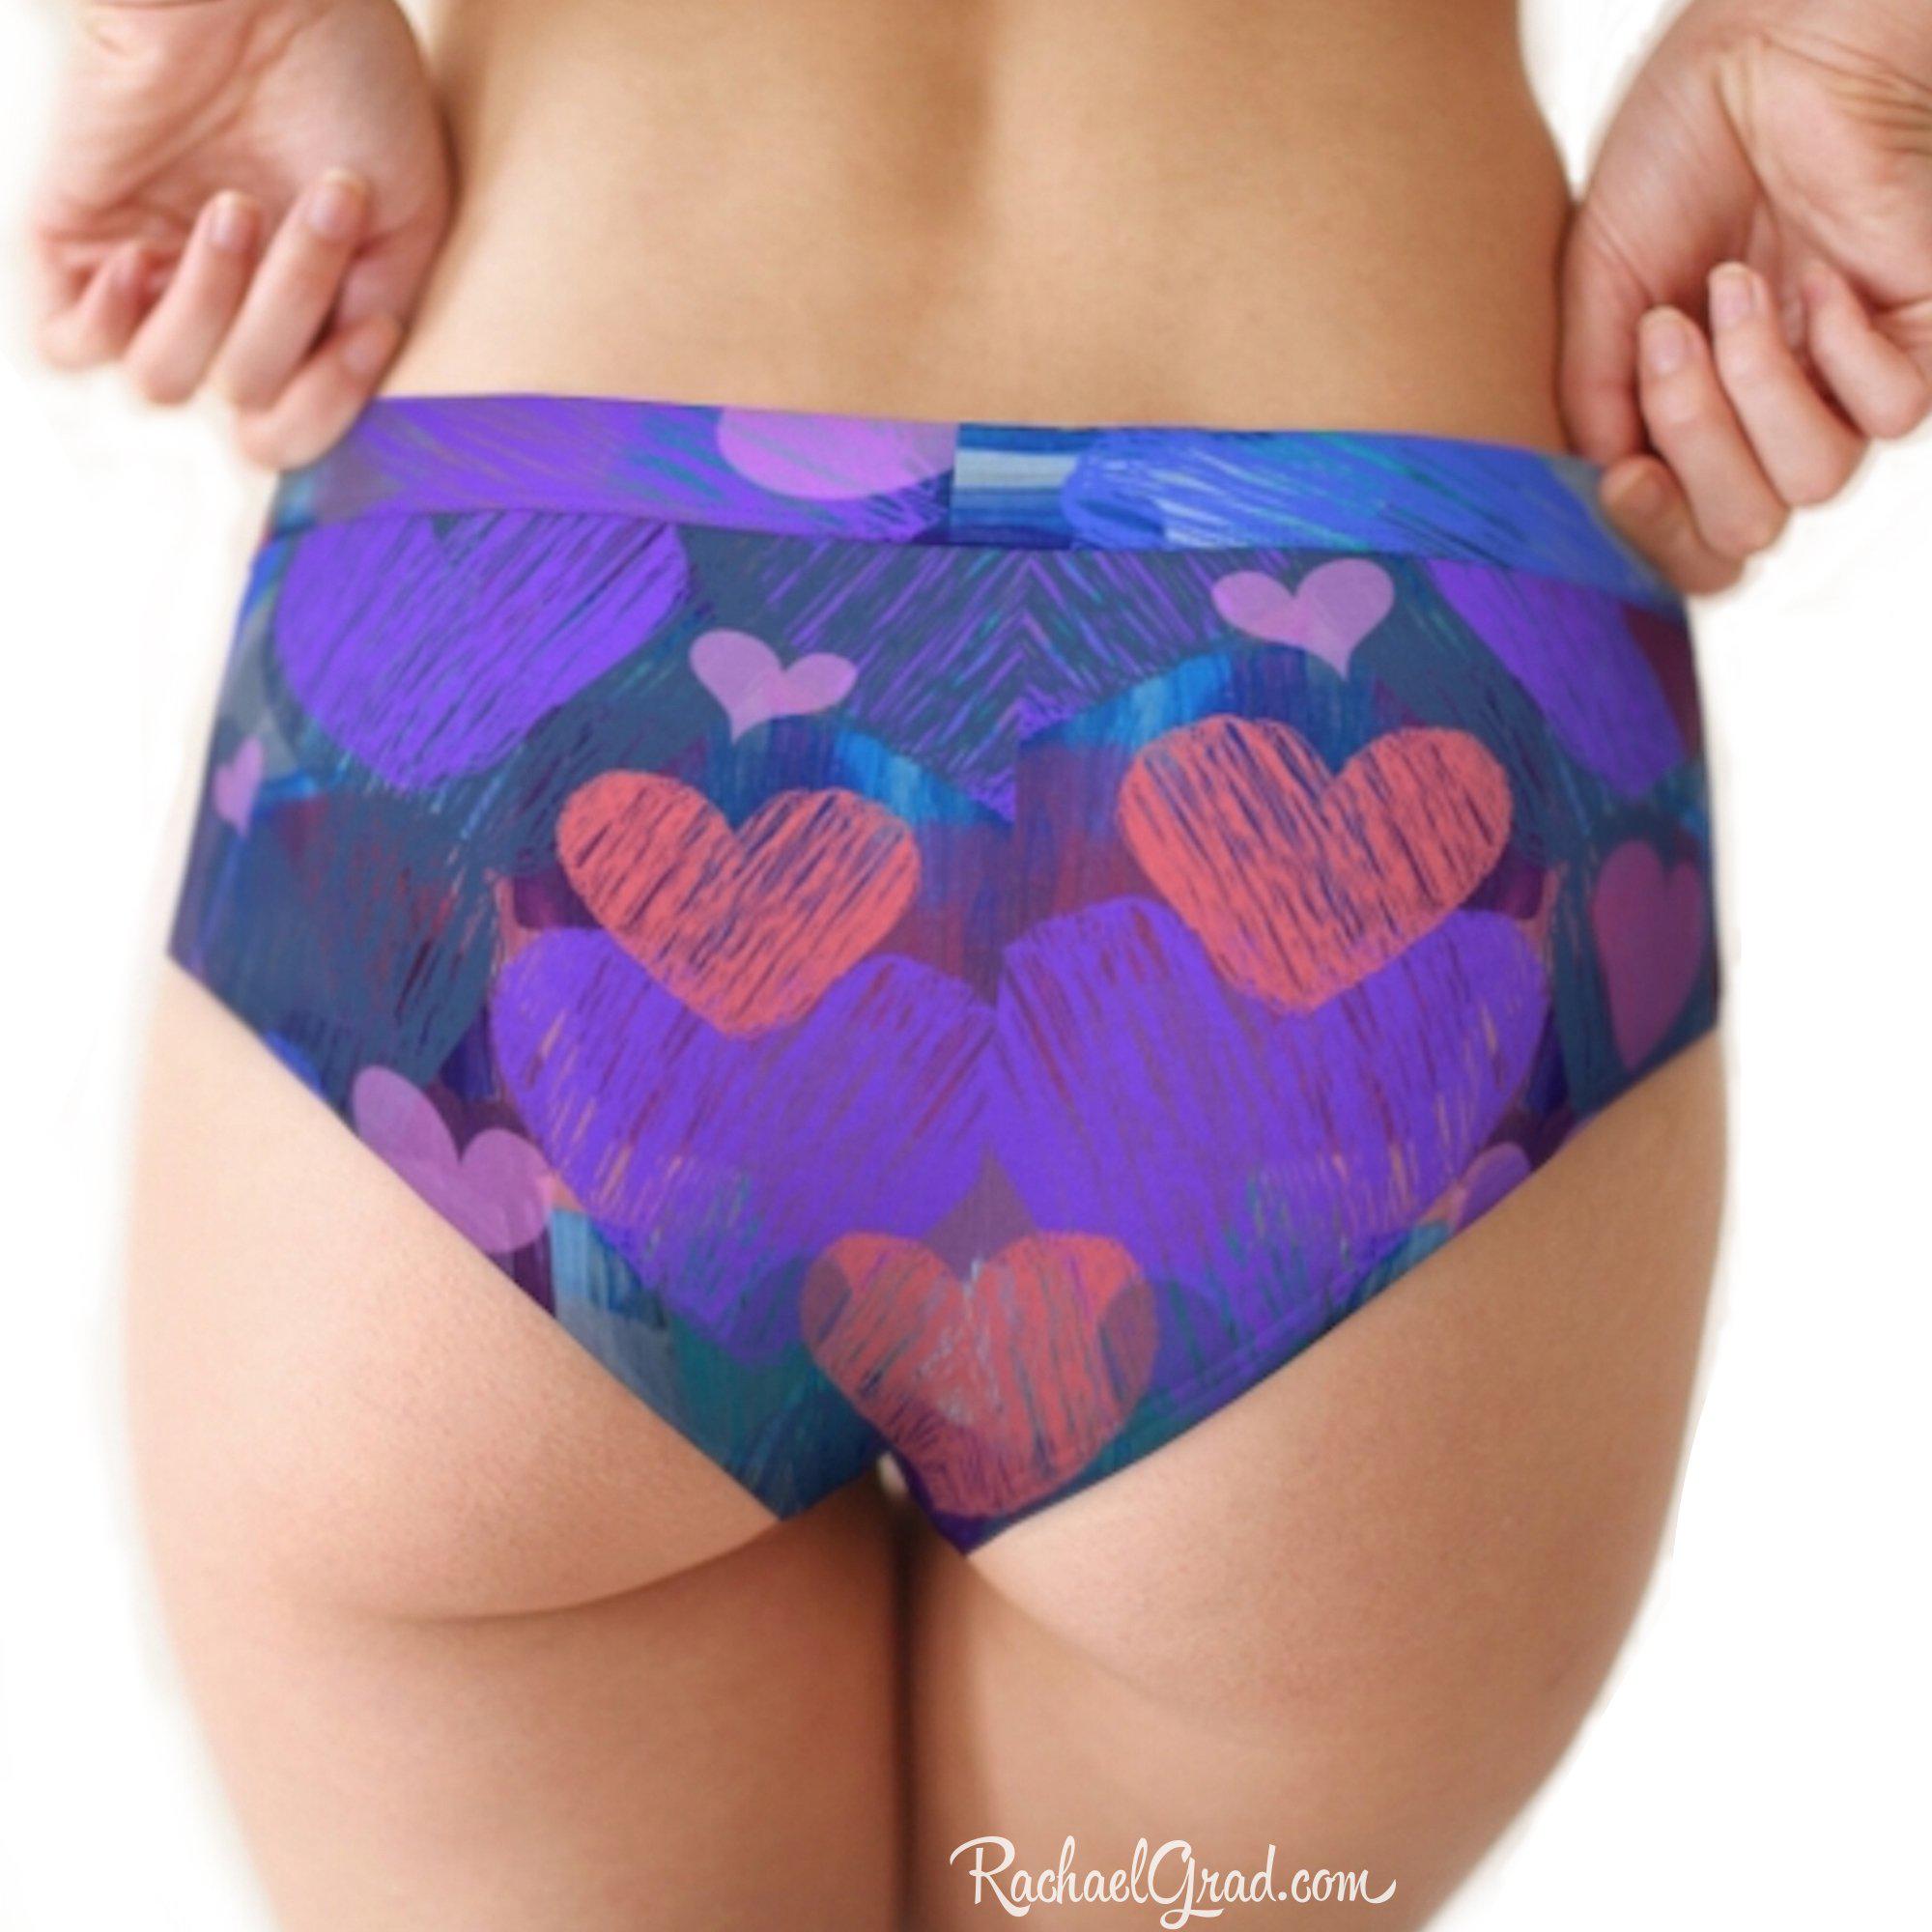 Love And Hearts Underwear Valentine Male Boxer Brief Comfortable